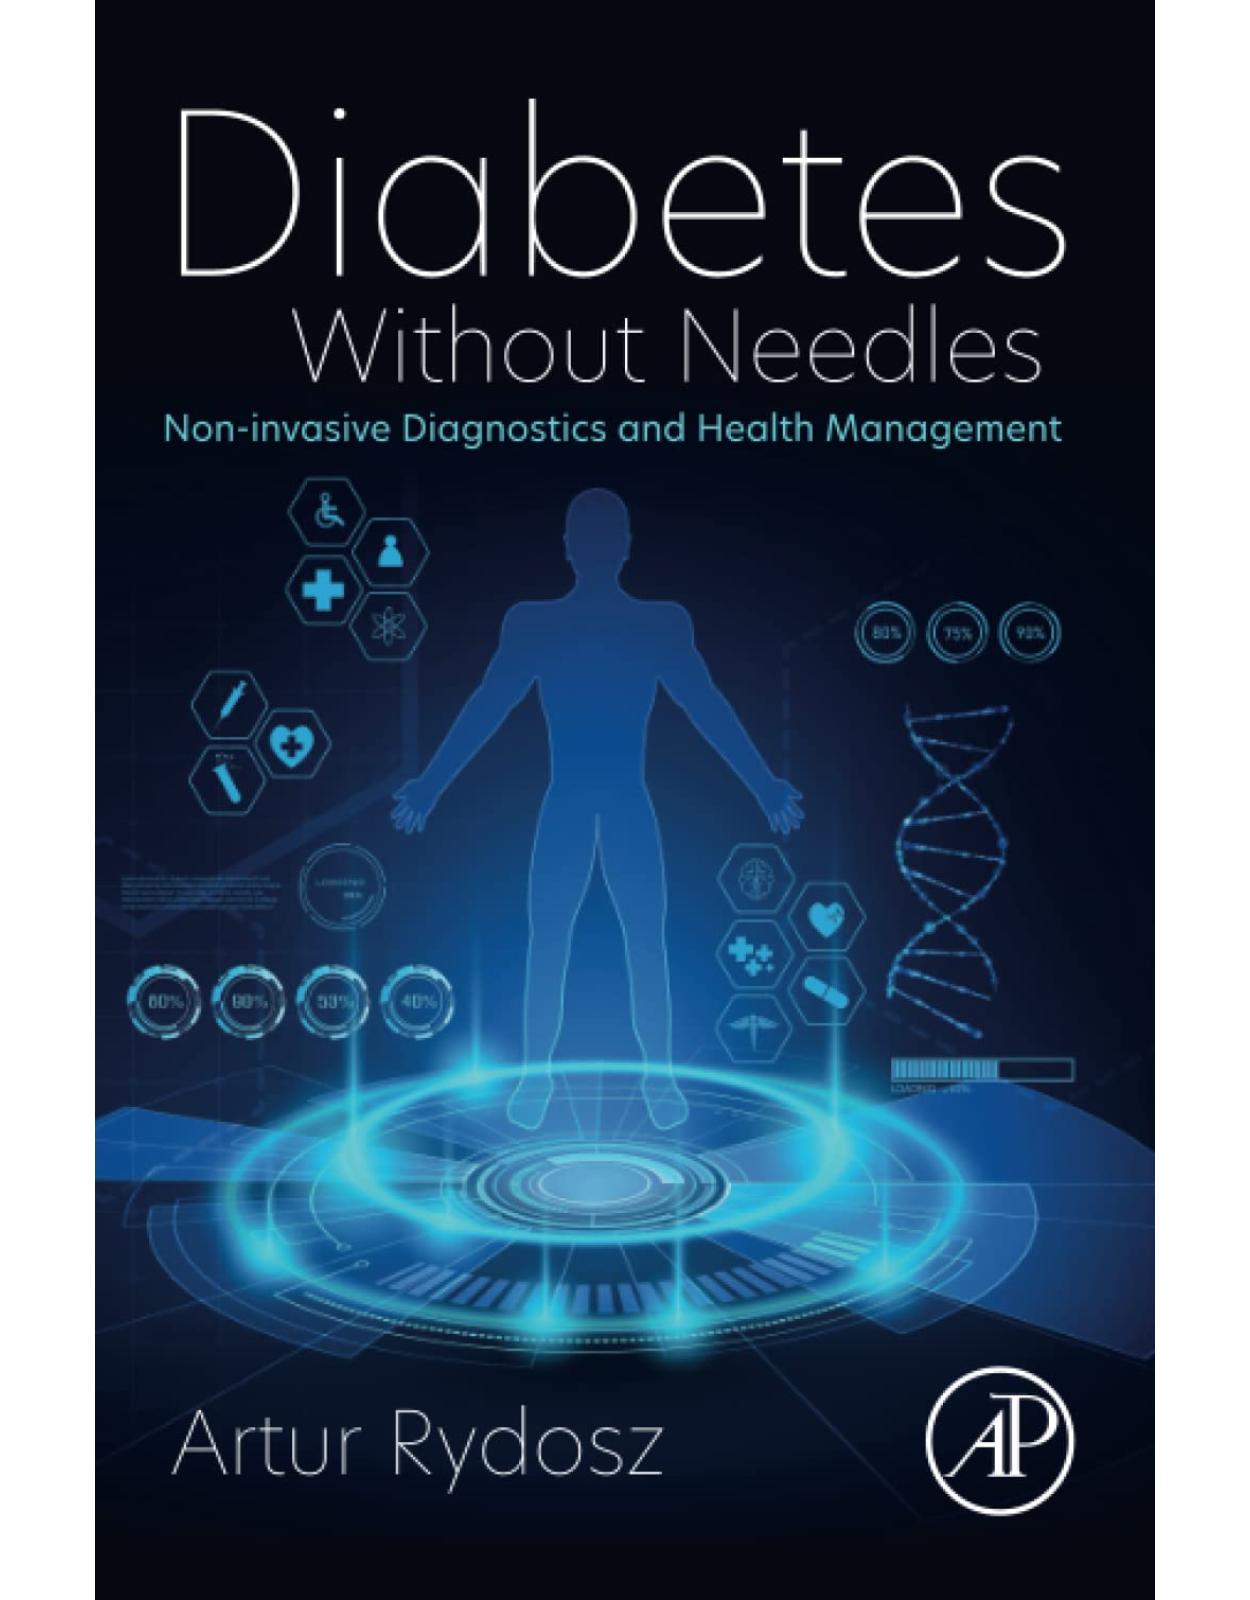 Diabetes Without Needles